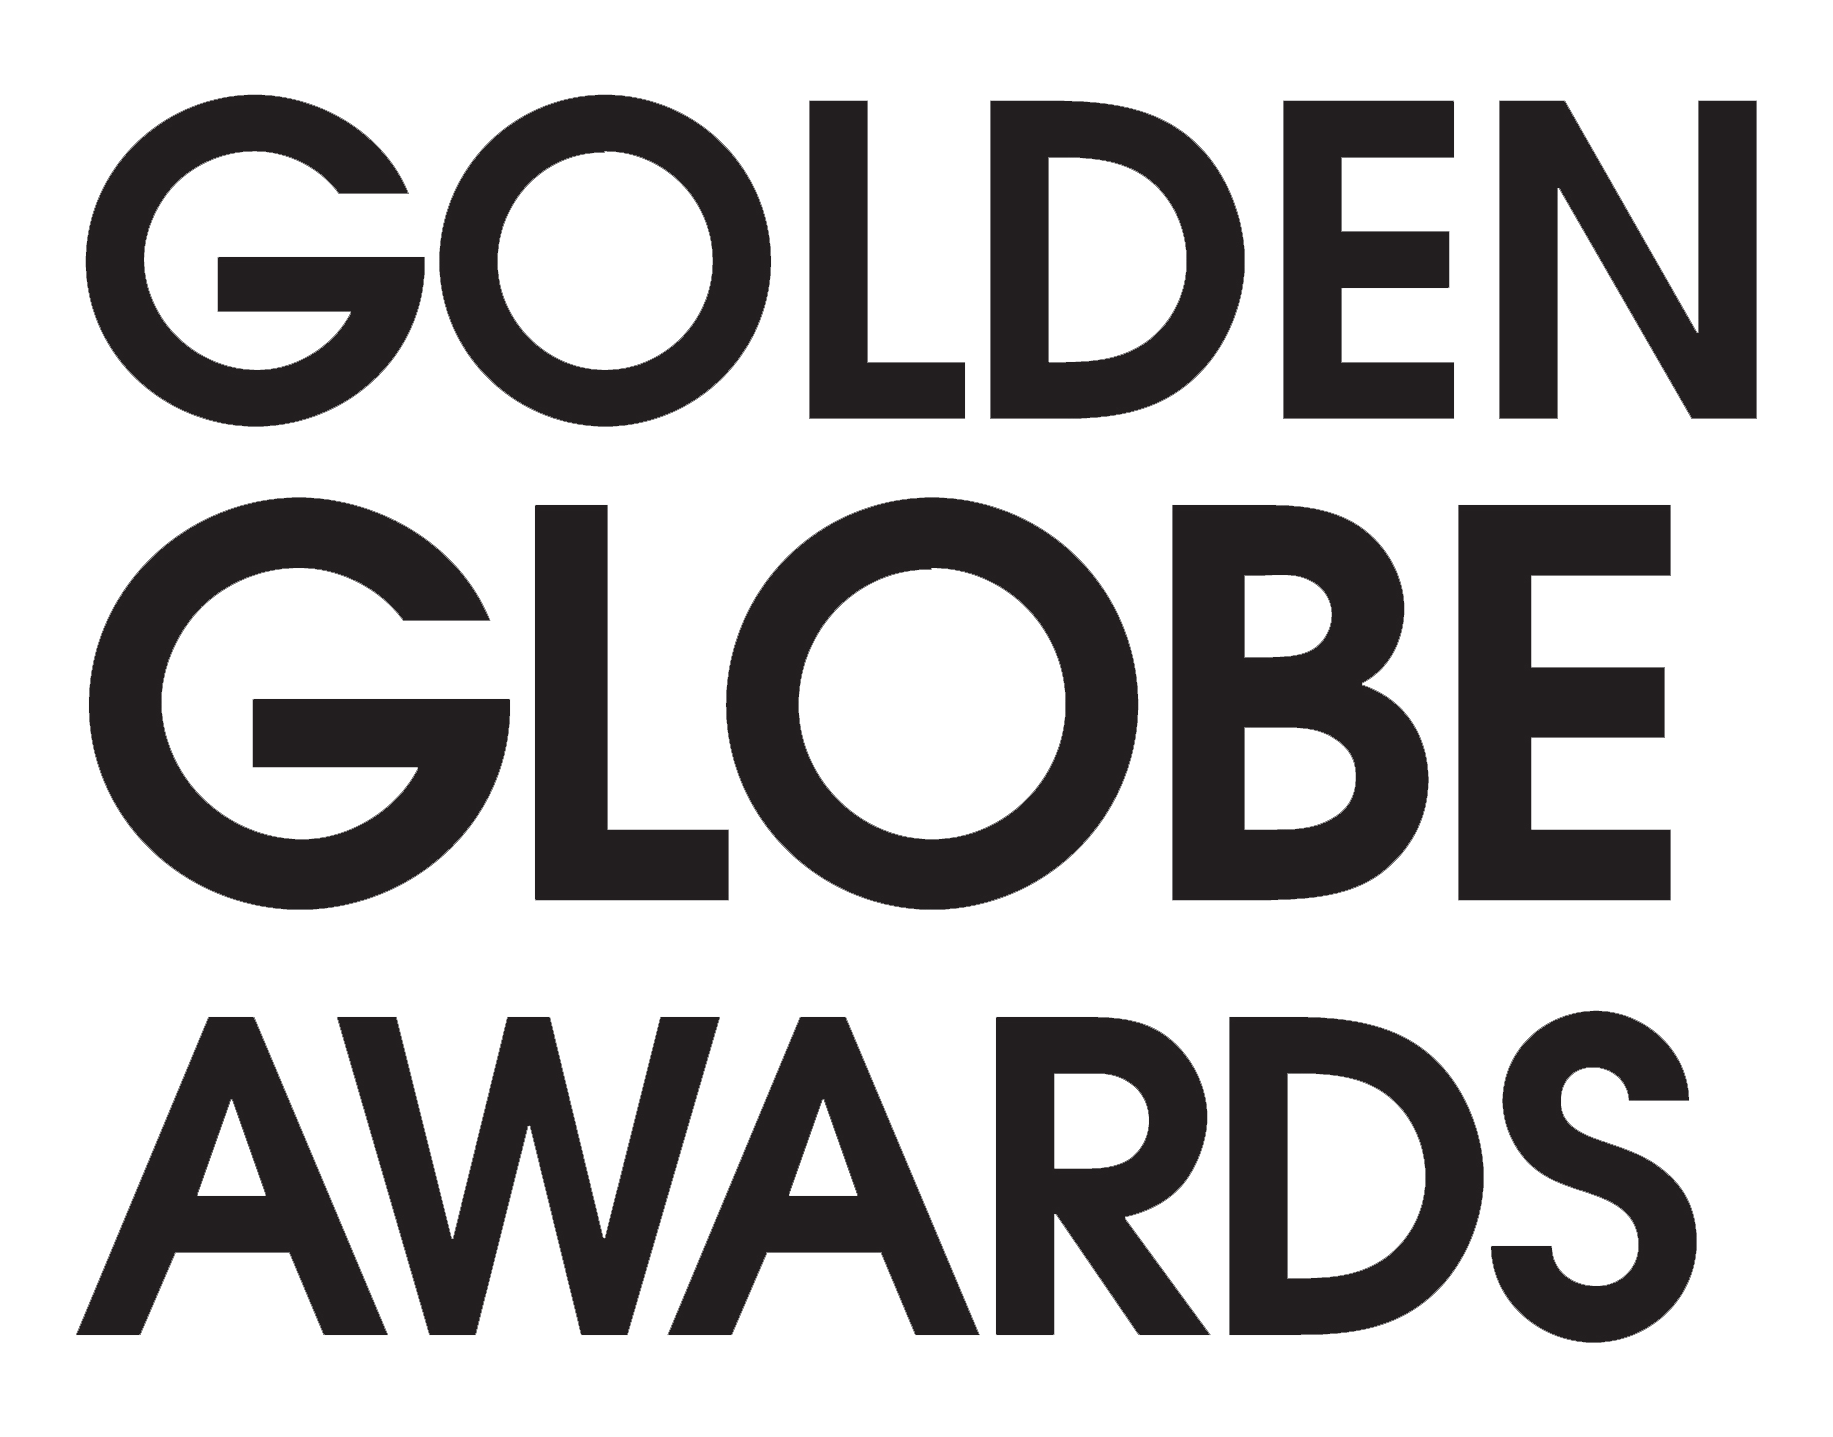 2 Globes Logo - File:Golden Globe text logo.png - Wikimedia Commons